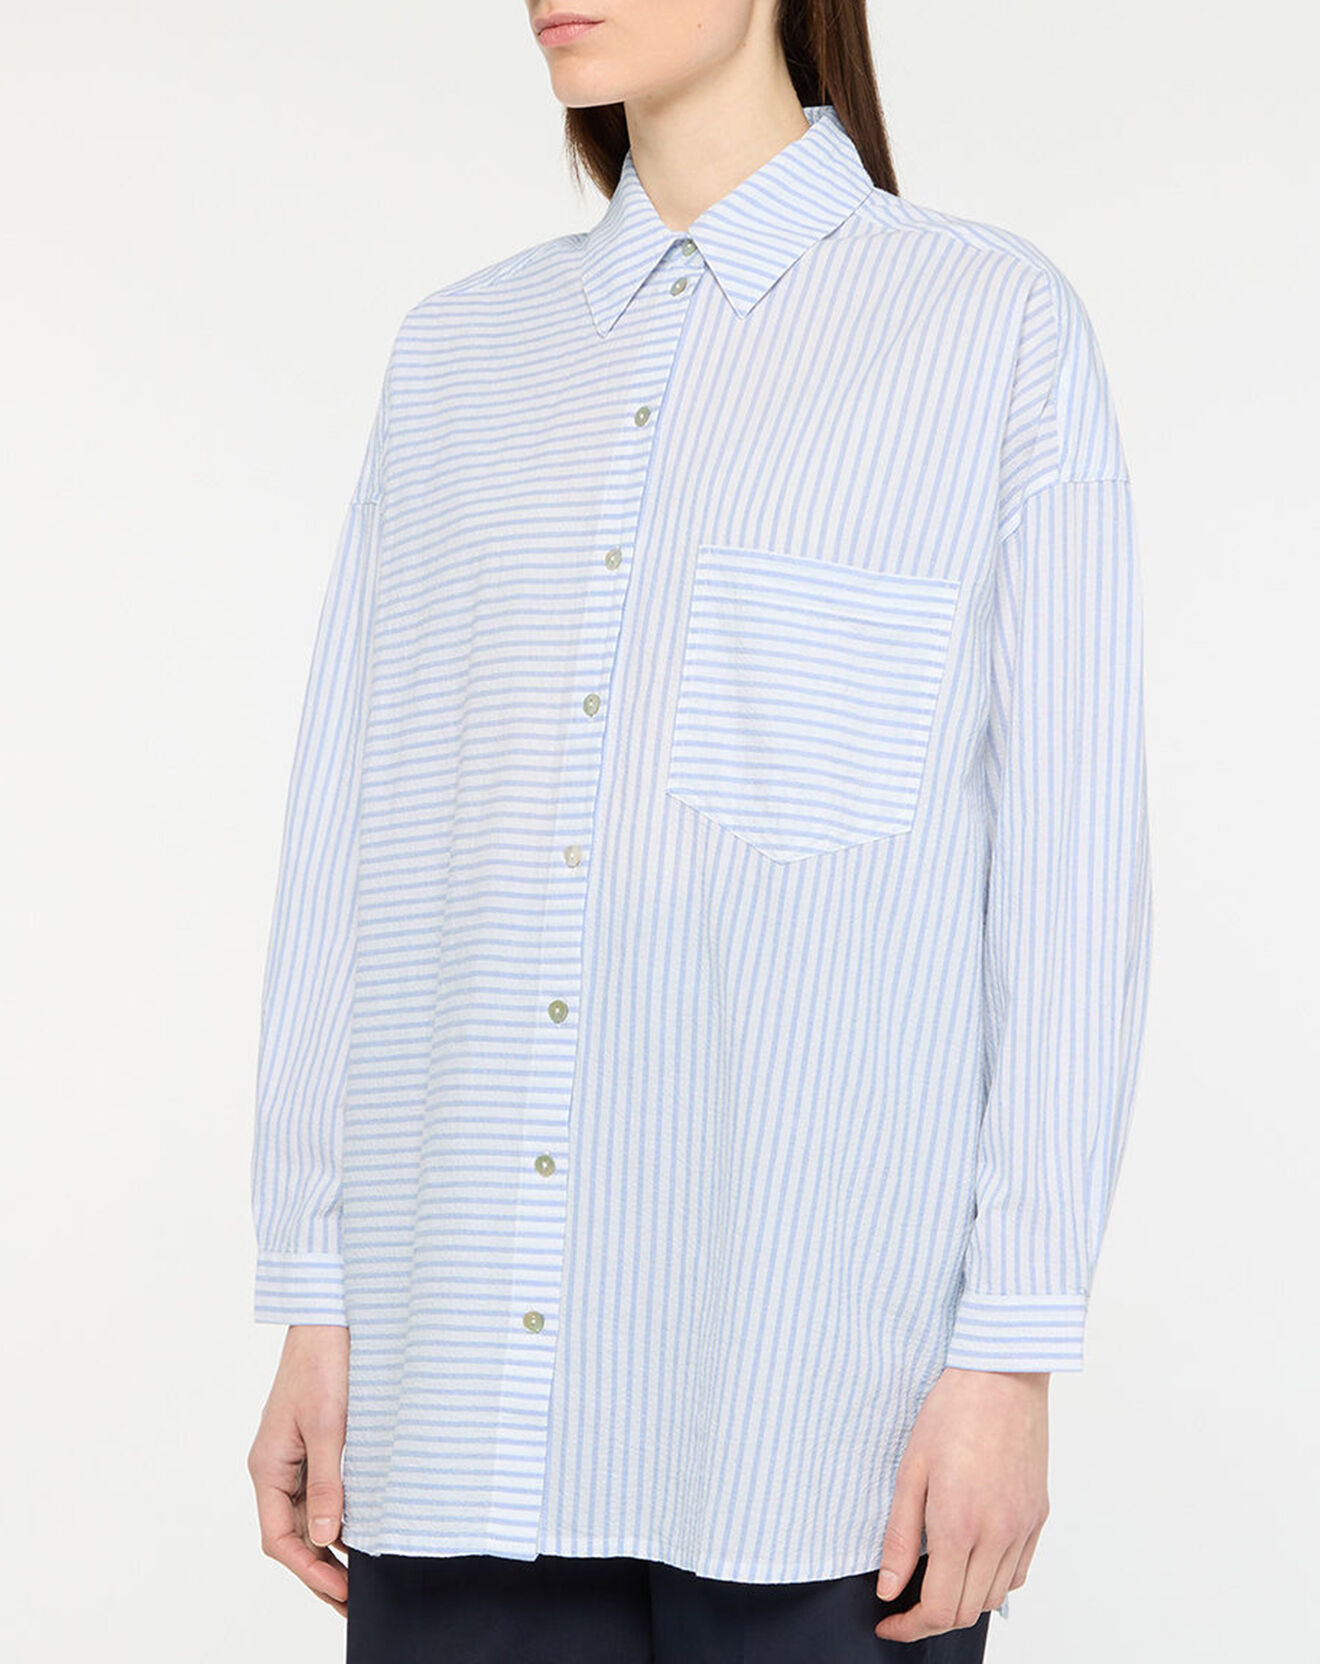 yerse - chemise sakura blanc/bleu